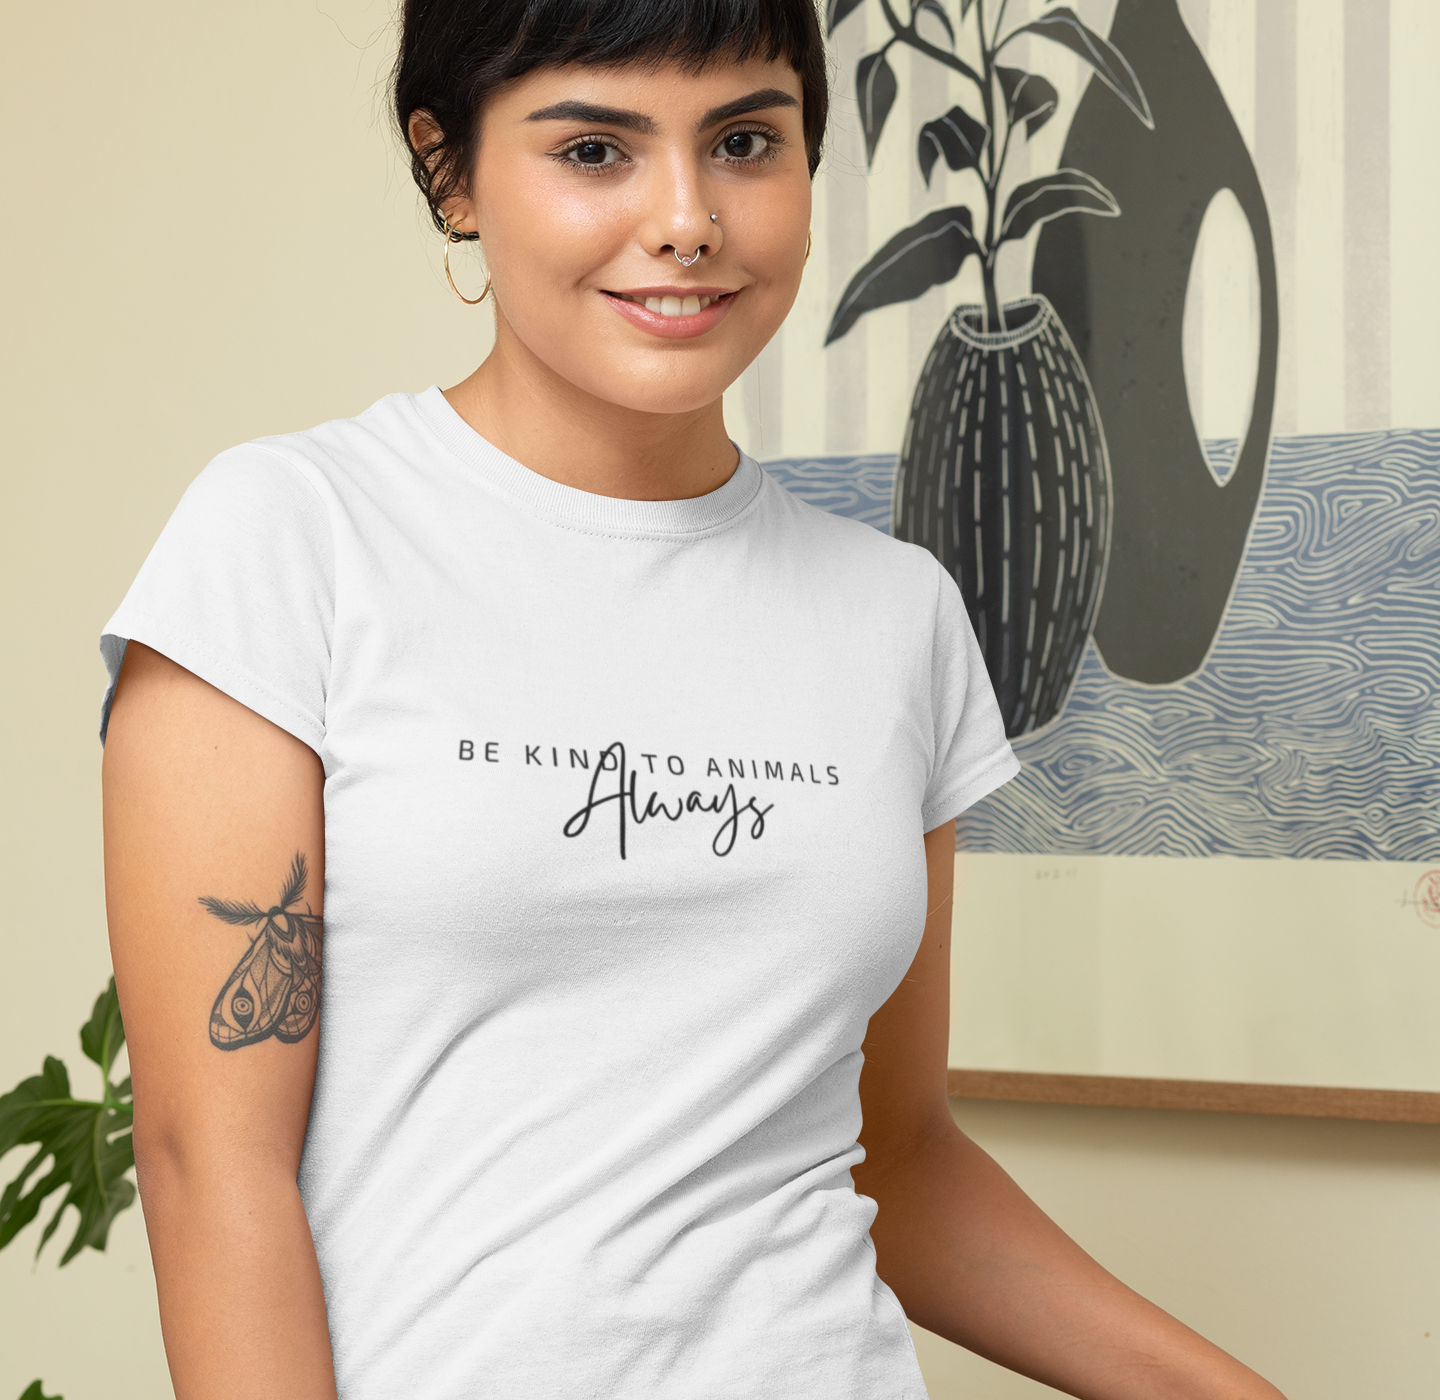 be kind to animals always - Damen T-Shirt Slim Fit